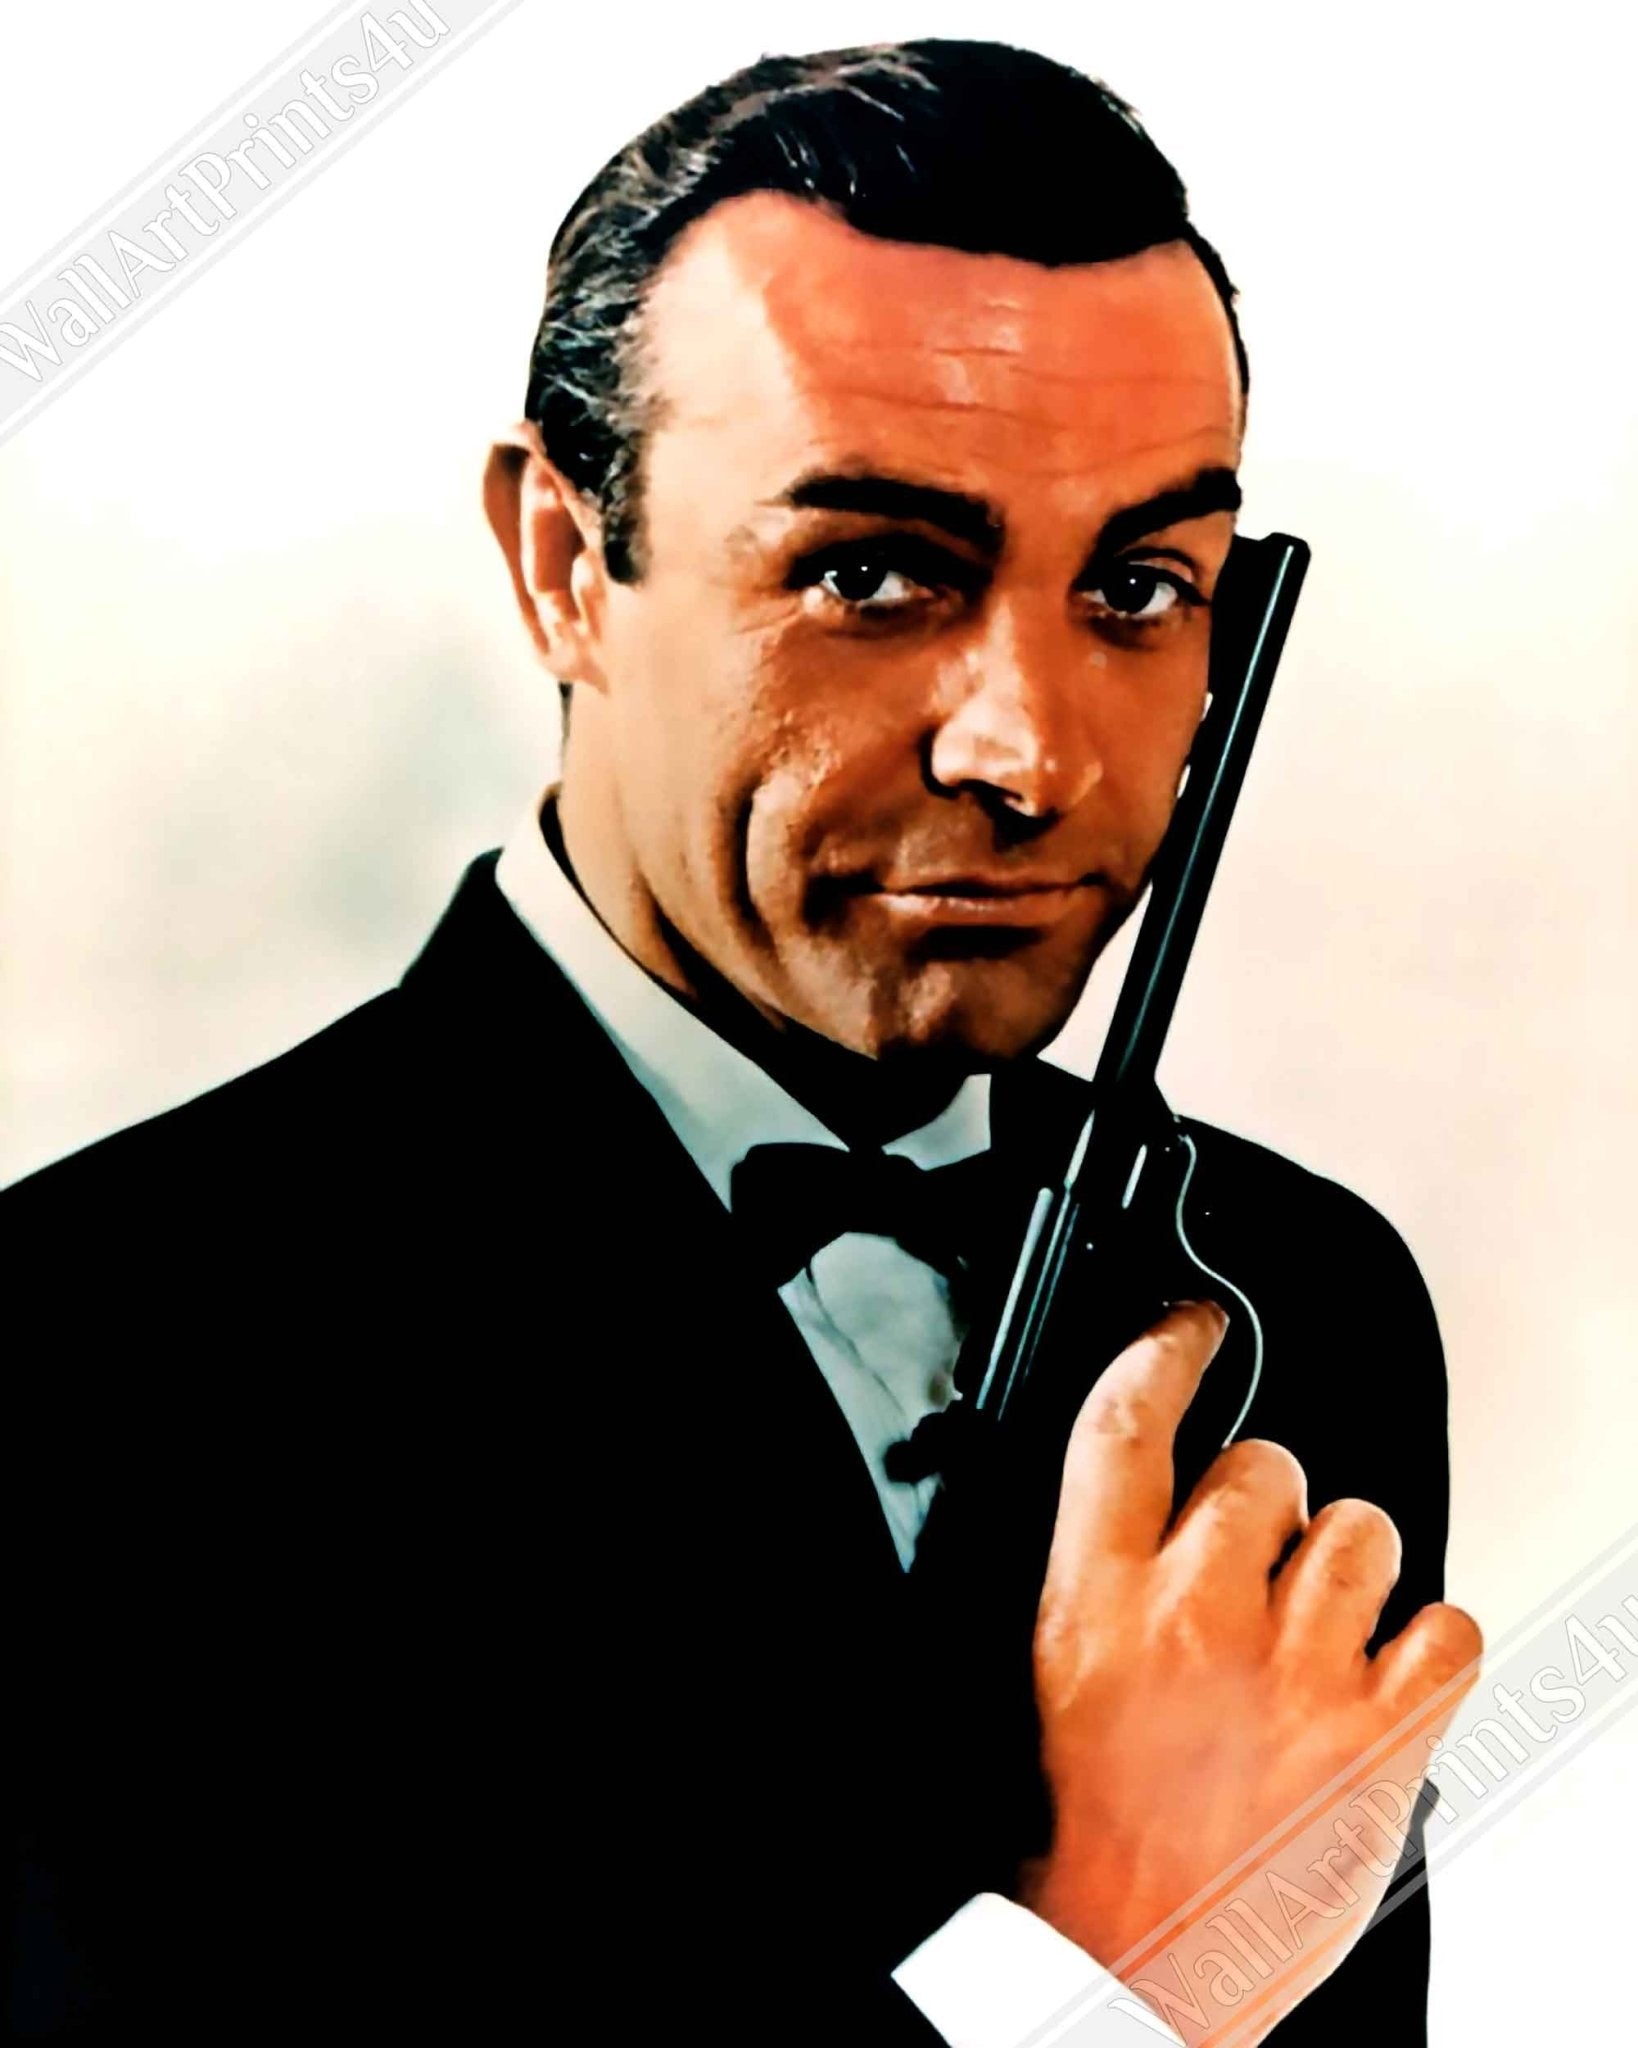 James Bond Poster, Sean Connery Handsome Actor, Vintage Photo - James Bond Print - WallArtPrints4U